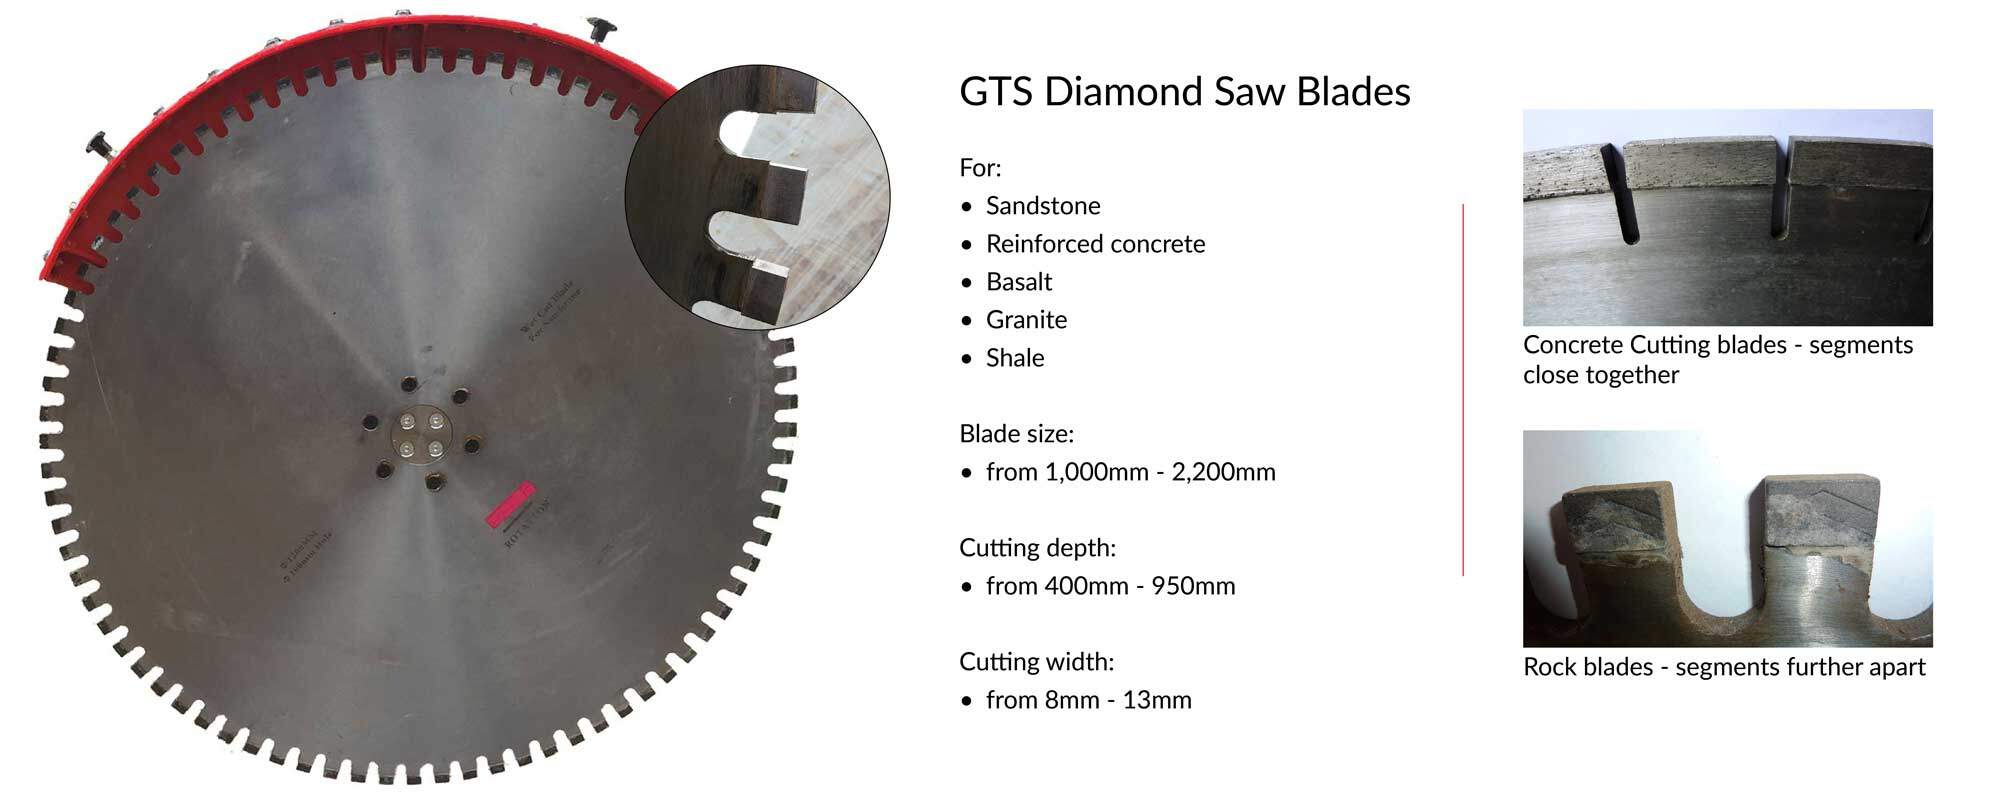 GTS Diamond Saw blades